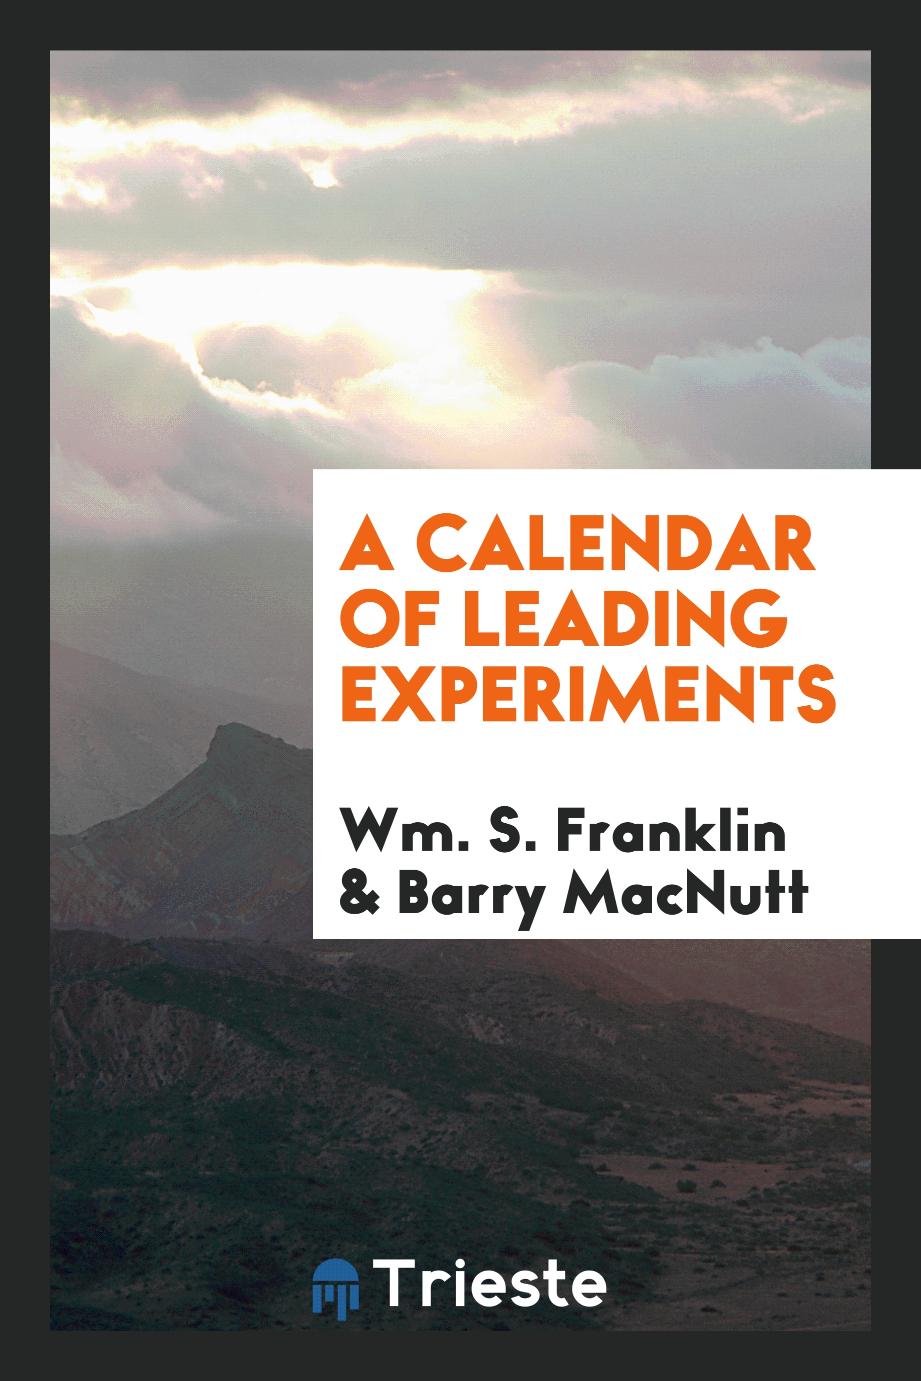 A calendar of leading experiments